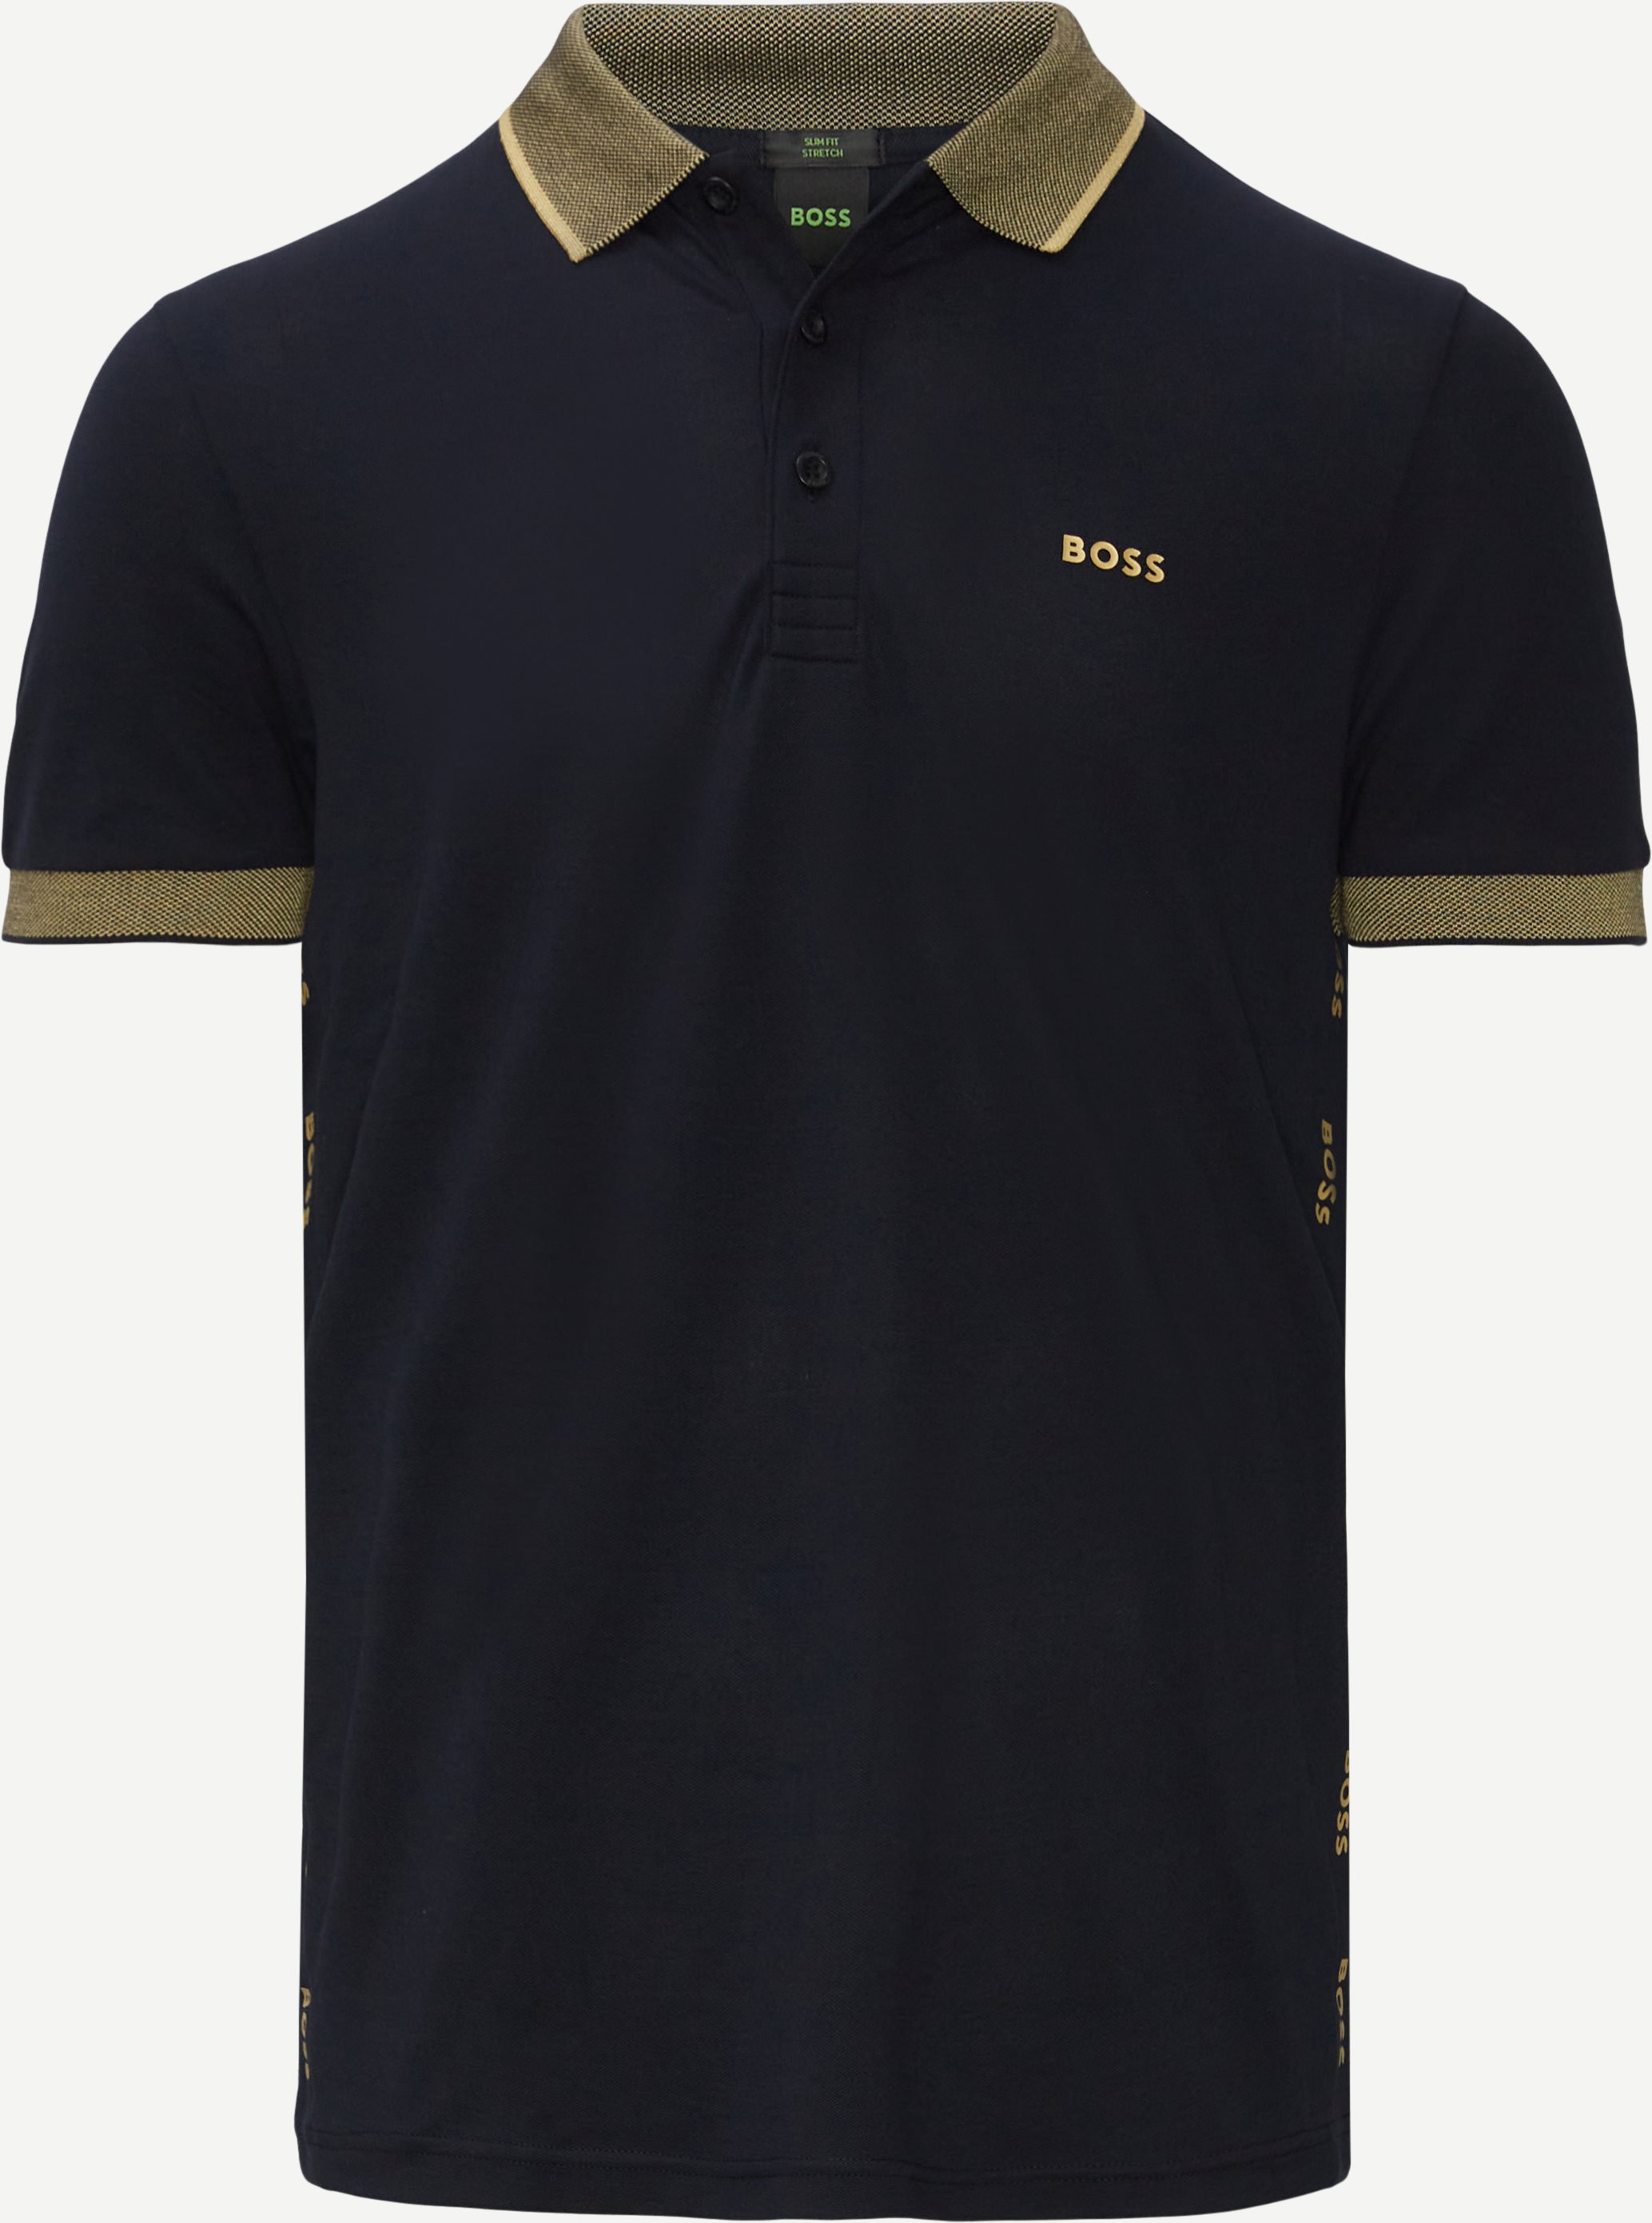 Paule Polo T-shirt - T-shirts - Slim fit - Blå